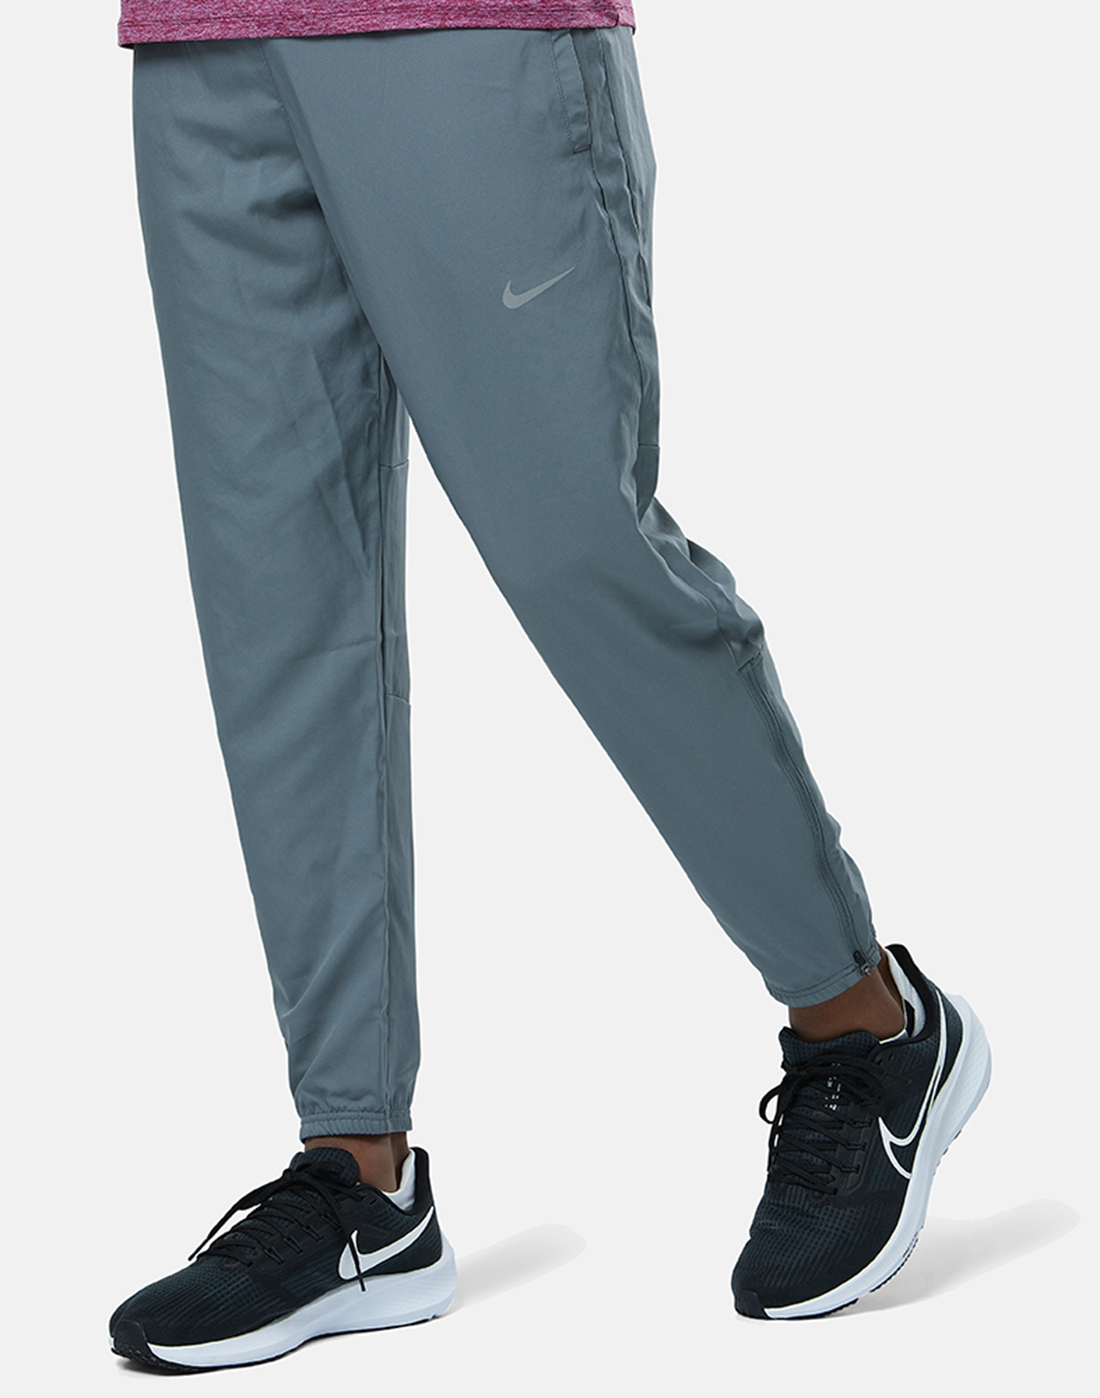 Nike Mens Challenger Woven Pants - Grey | Life Style Sports UK